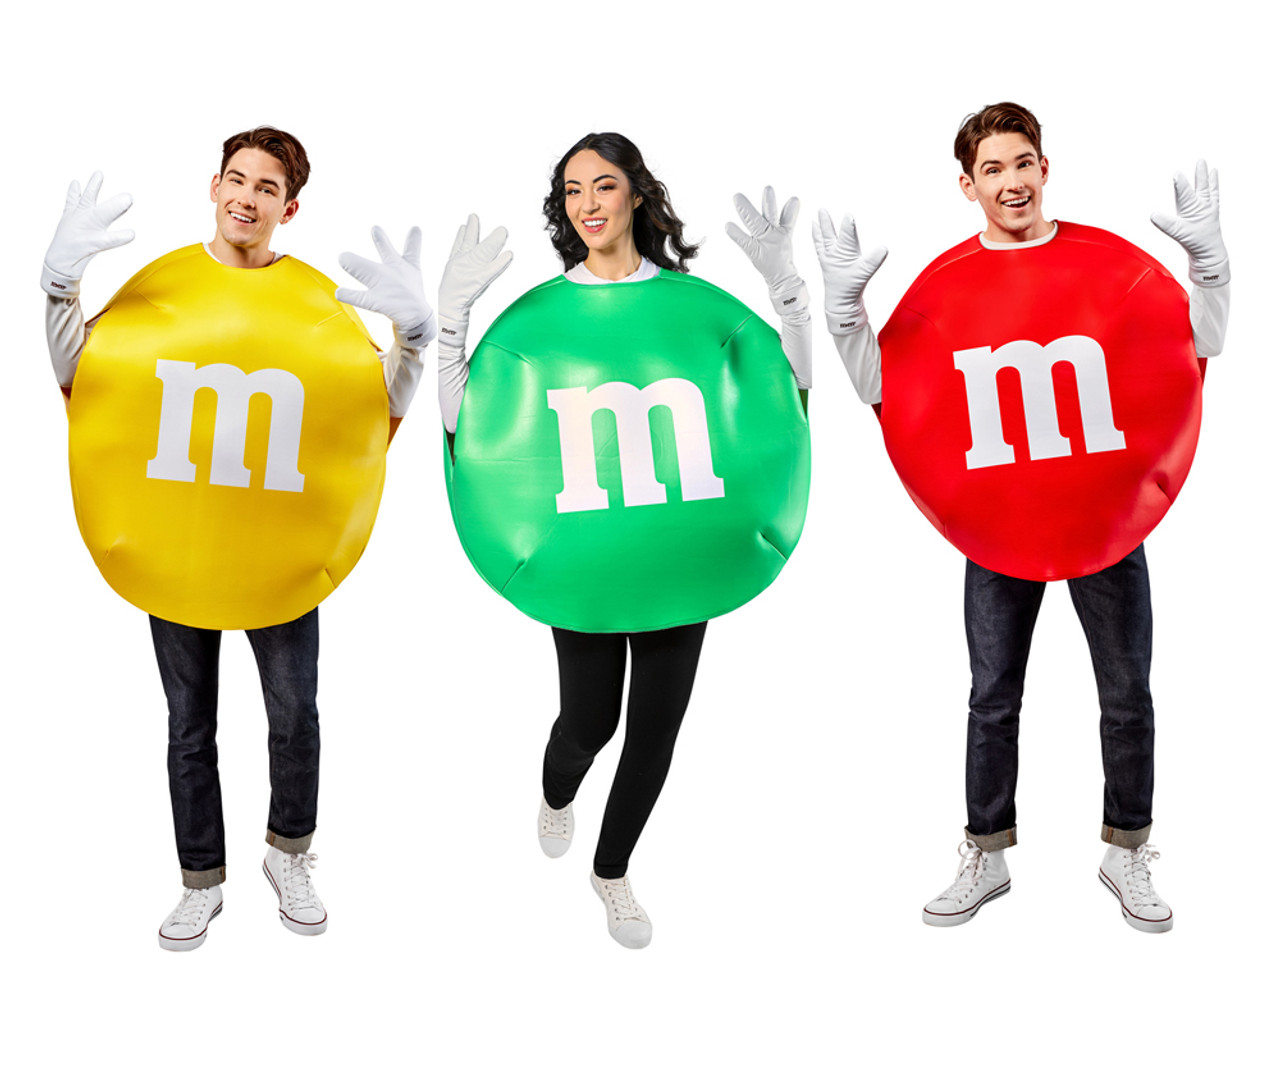 M&M'S GREEN CHARACTER ADULT UNISEX HALLOWEEN COSTUME 